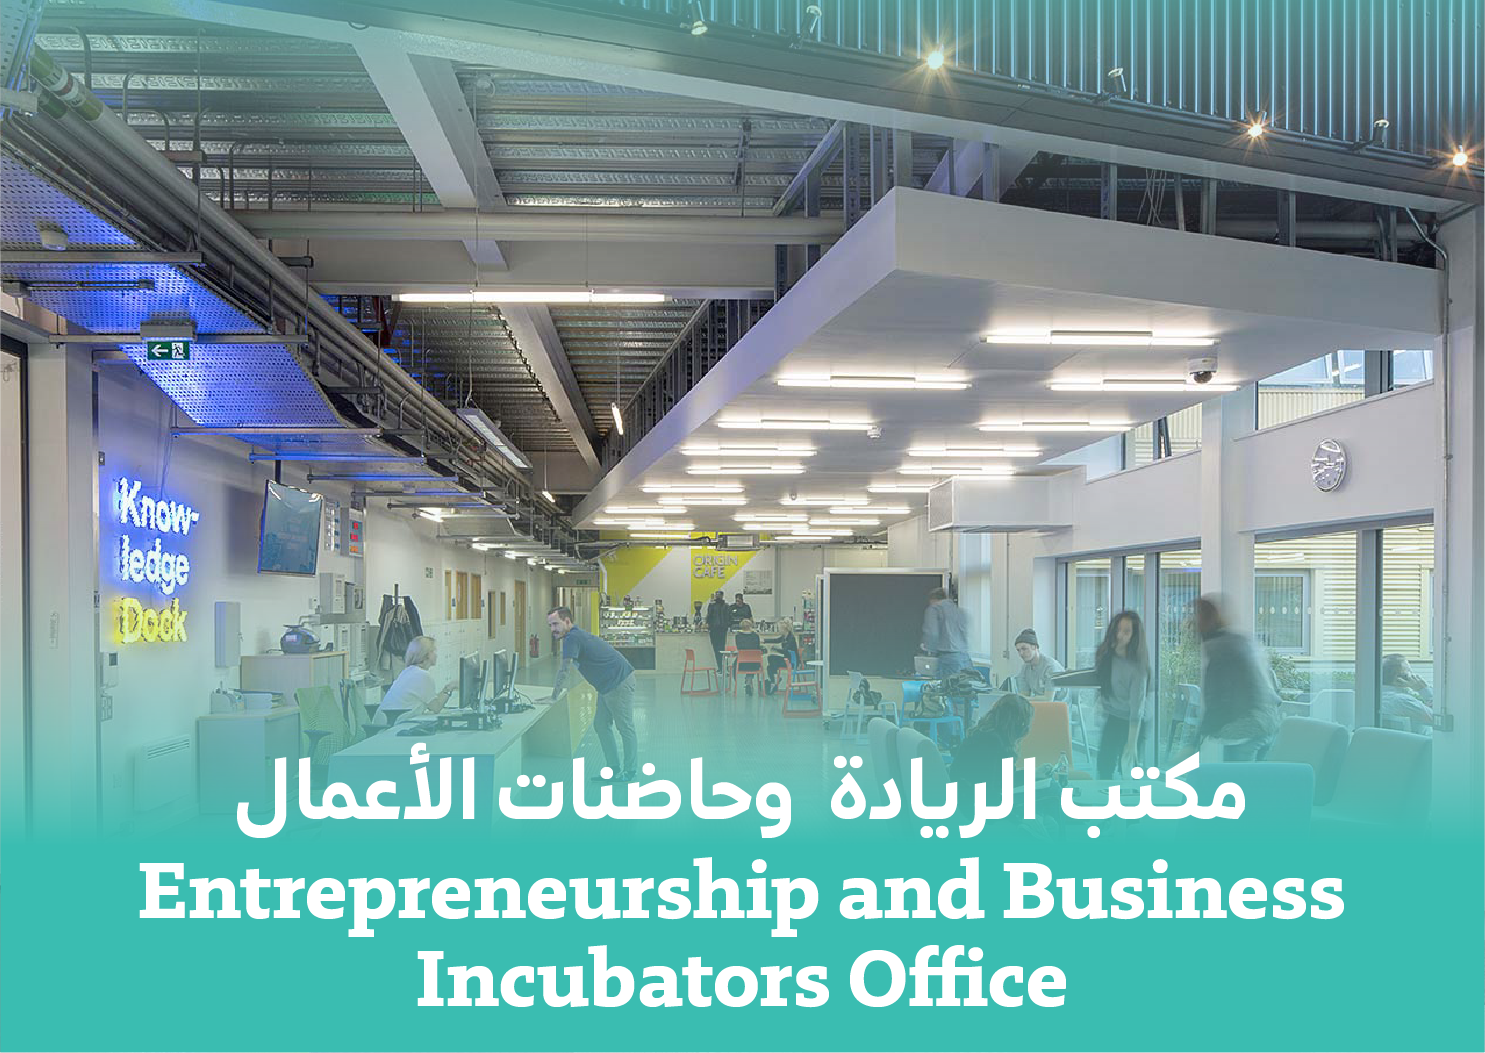 Entrepreneurship and Business Incubators Office